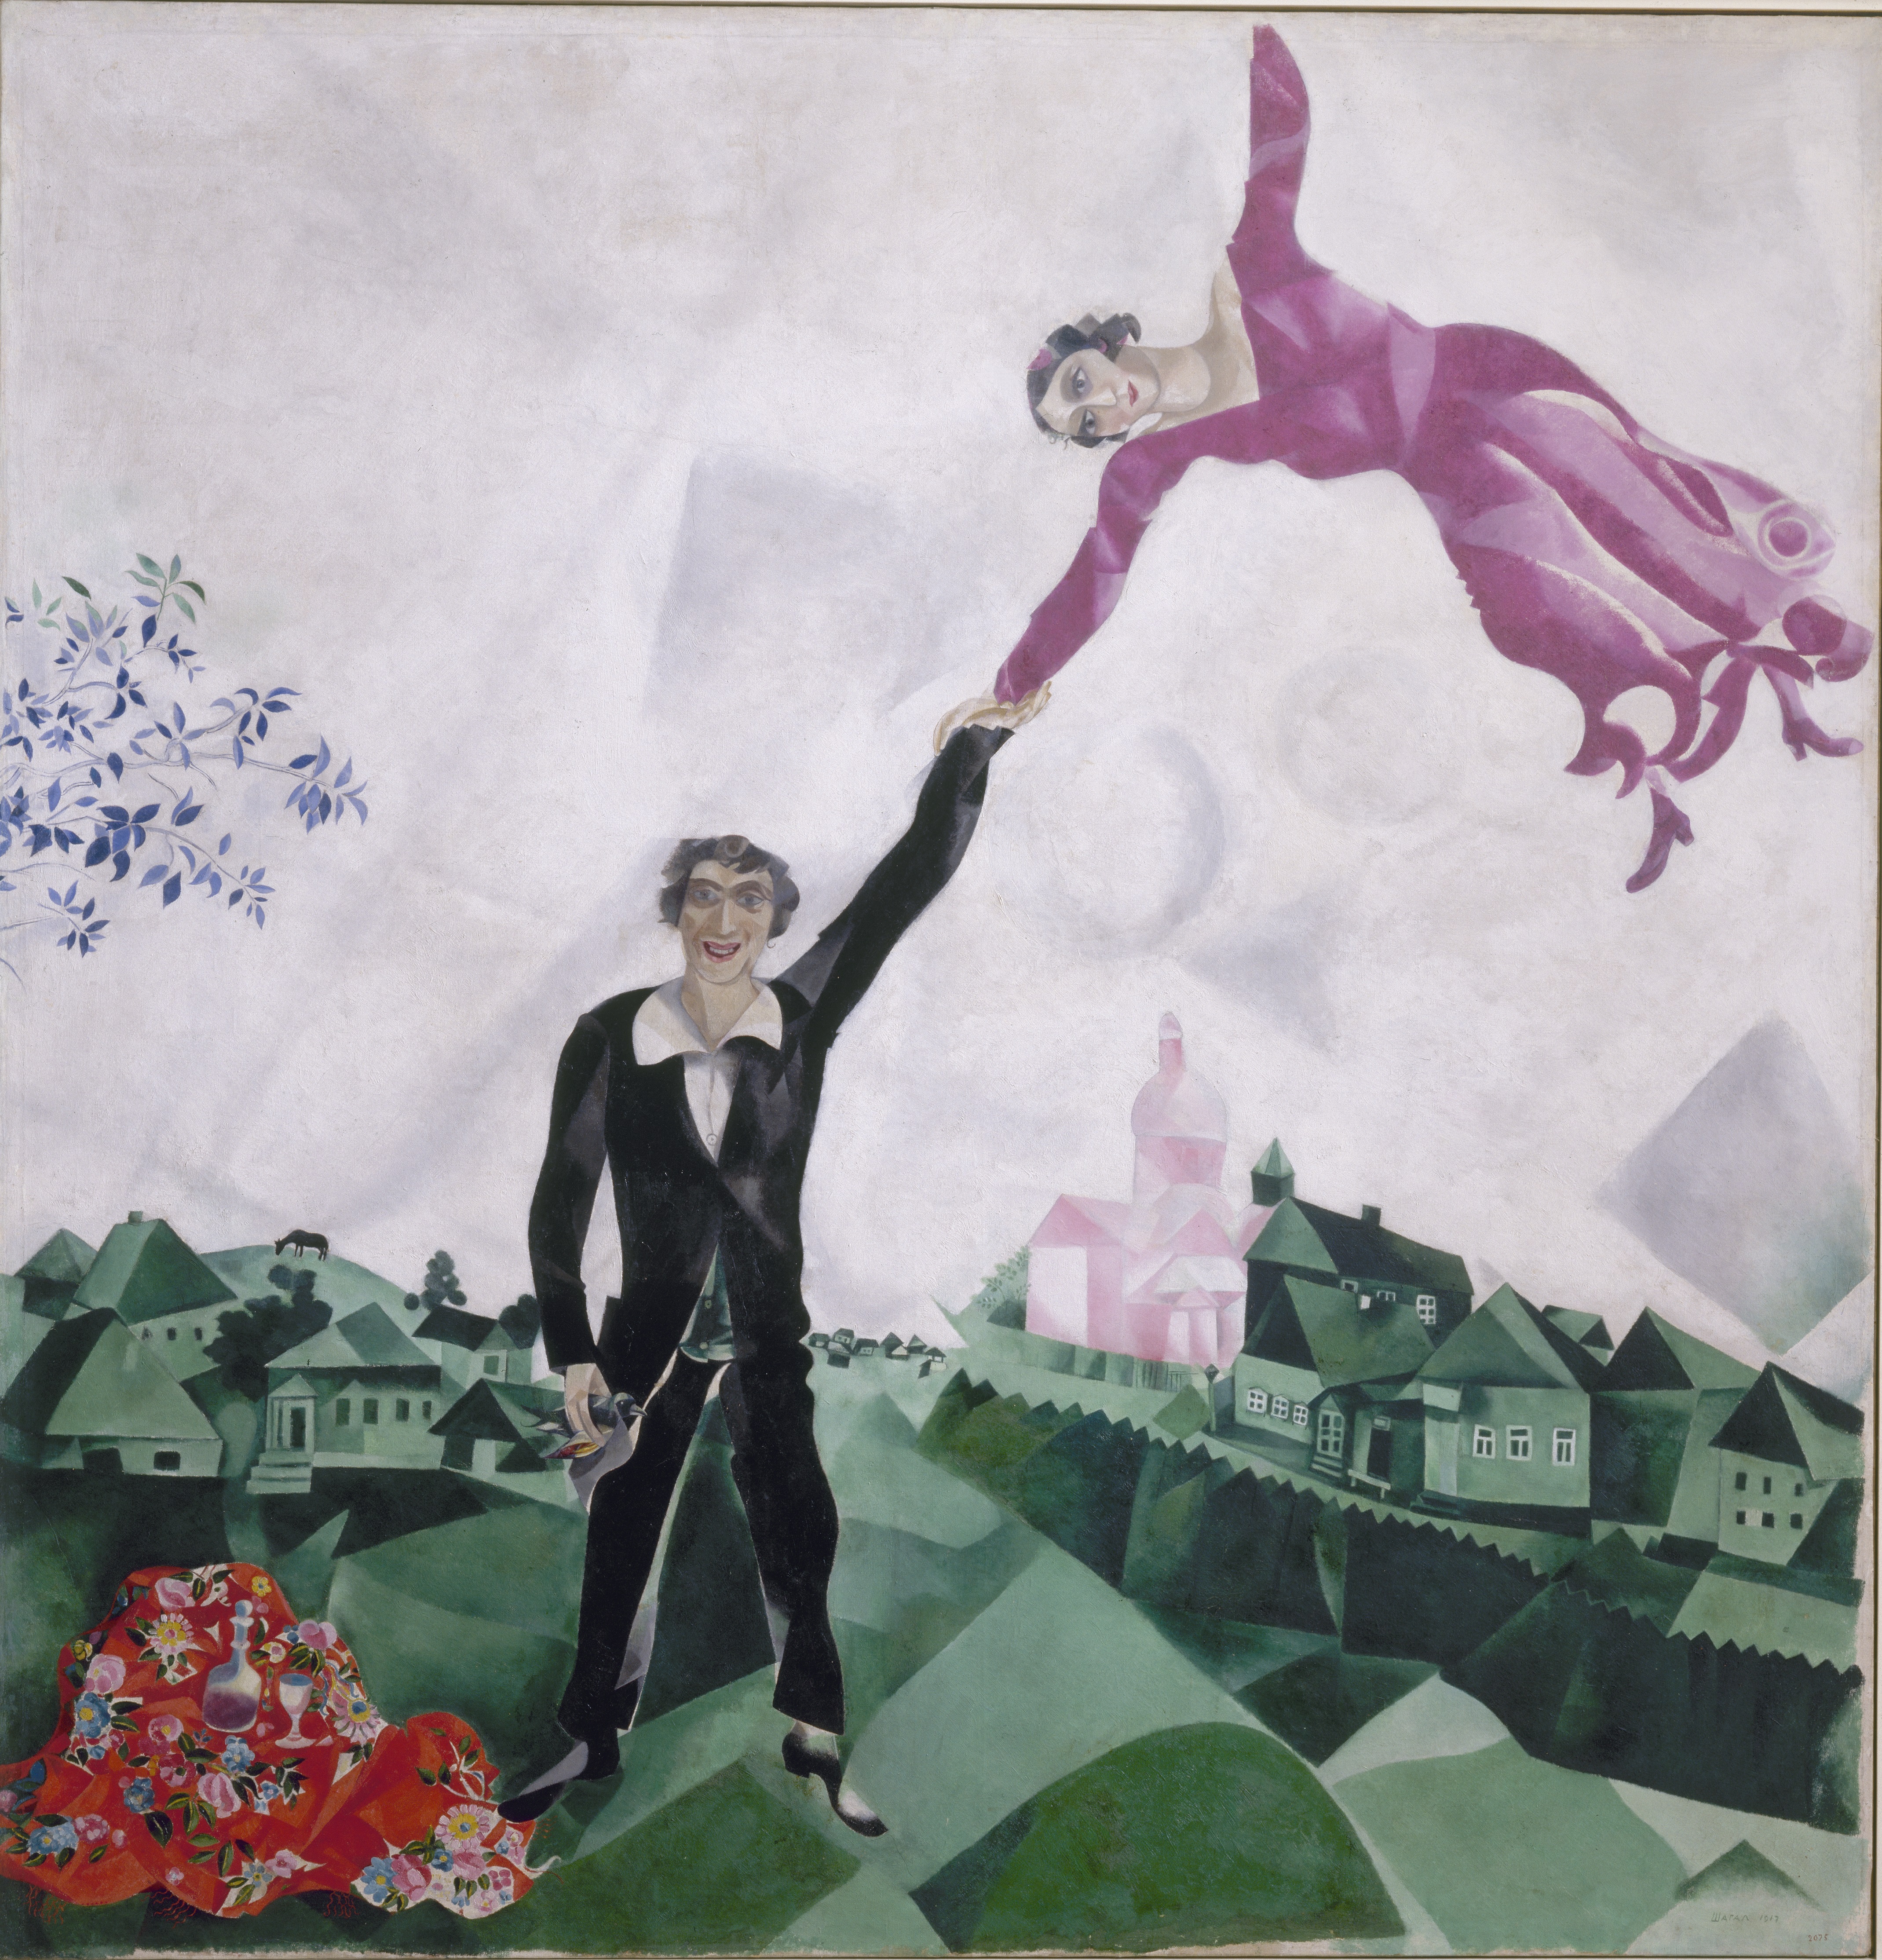 Marc Chagall, La passeggiata. Promenade, olio su tela, 1917 © State Russian Museum, St. Petersburg